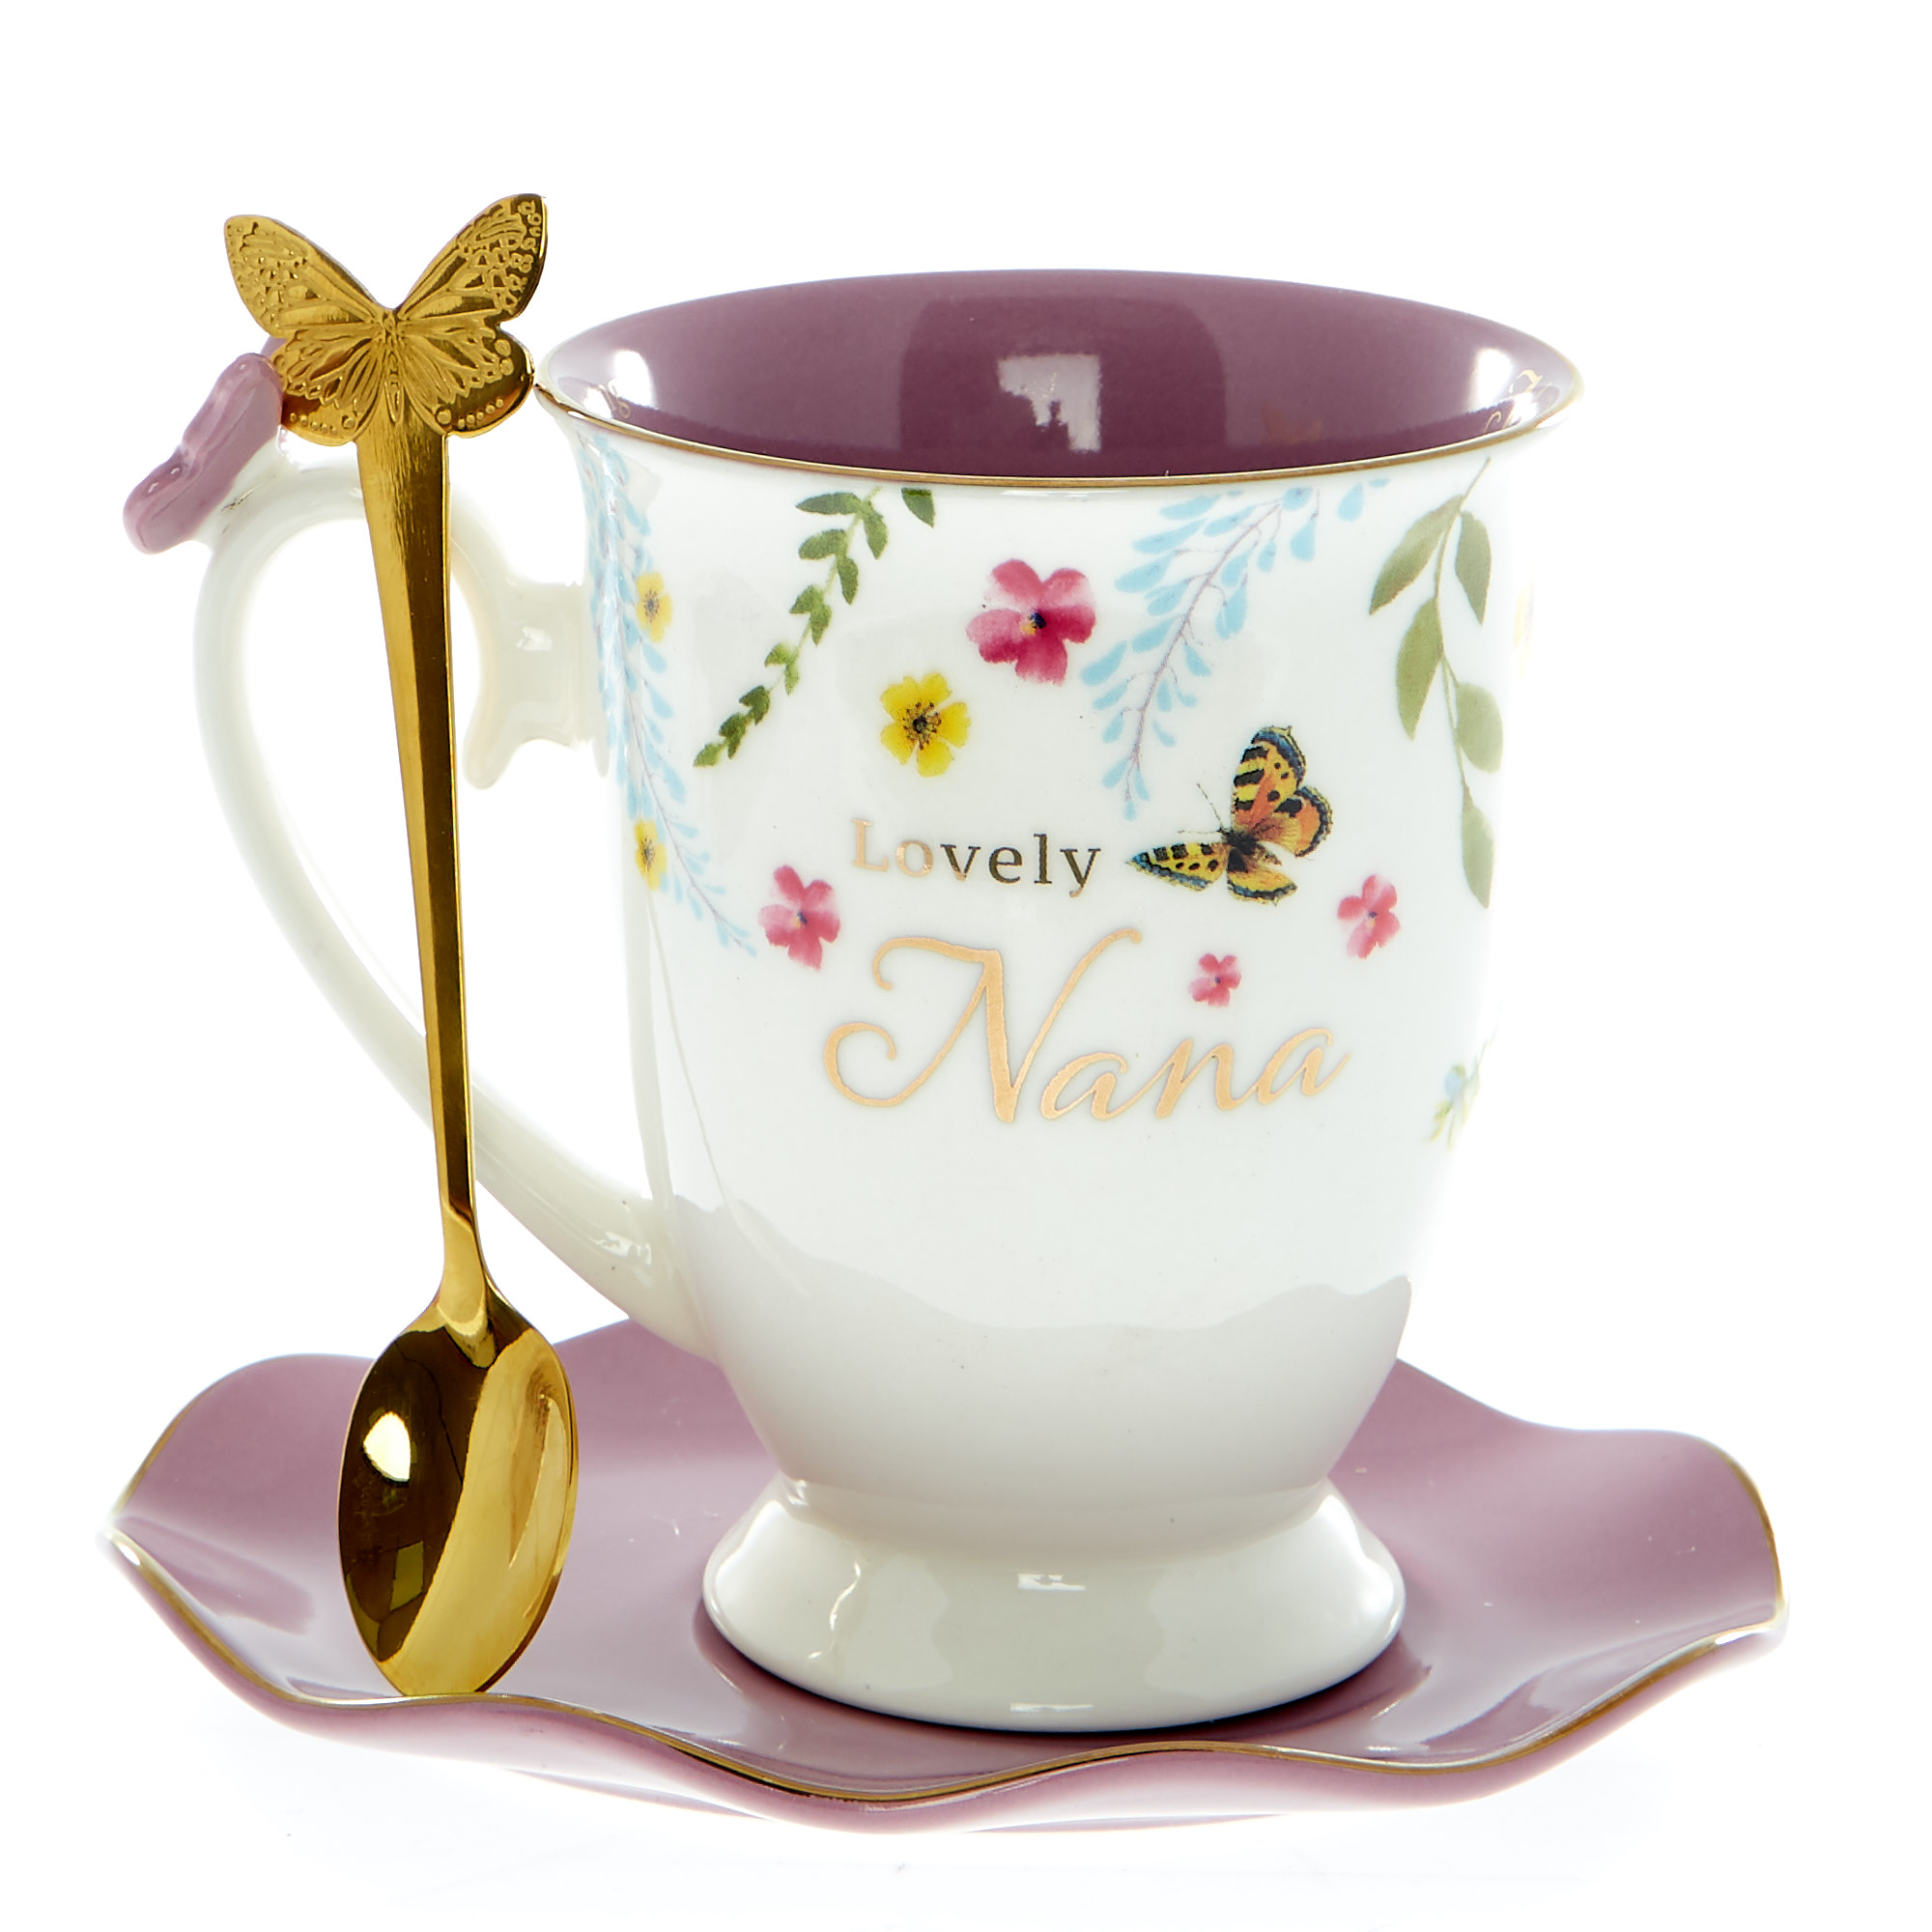 Lovely Nana Teacup, Saucer & Spoon Set